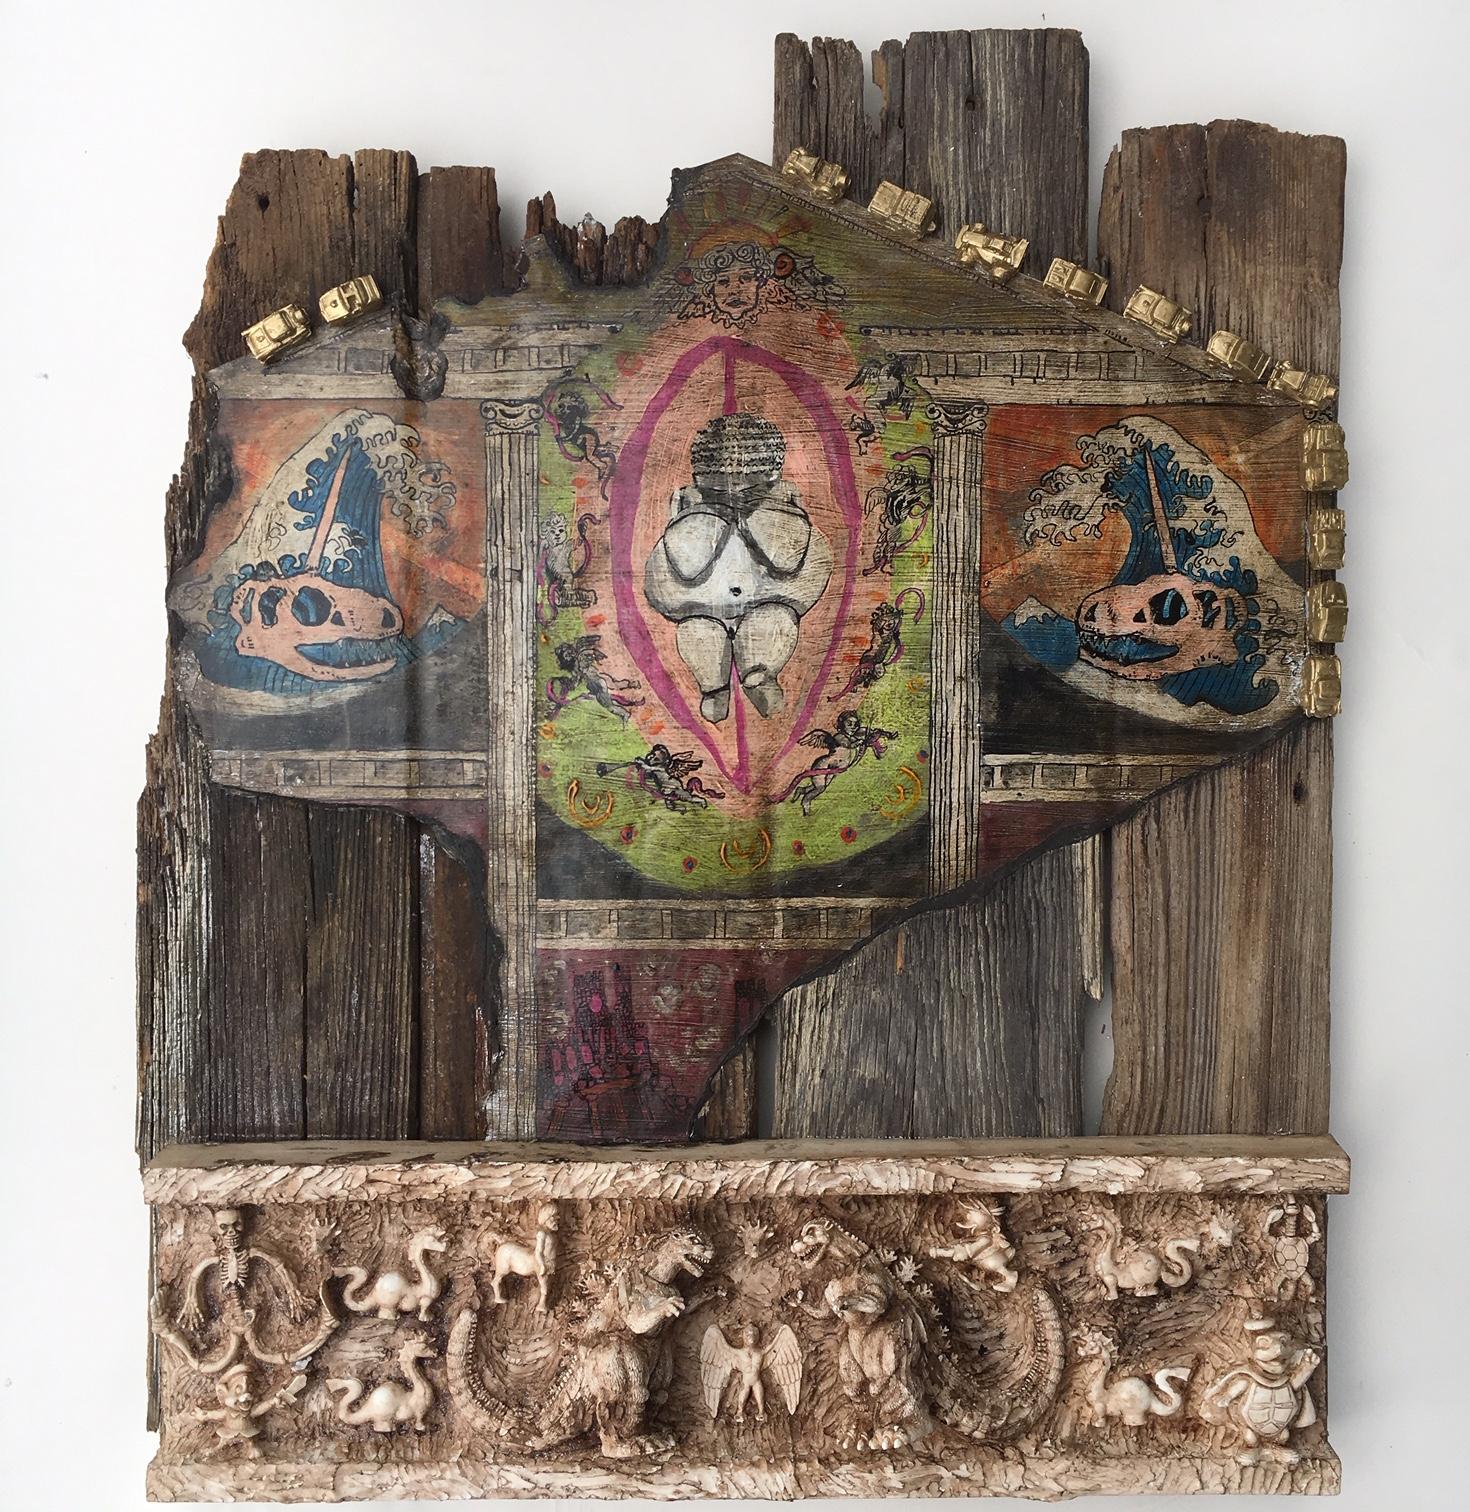 Modern Artifact Barn door with figures and animals: 'Birth of Rhomulus & Rhemus' - Mixed Media Art by Joshua Goode